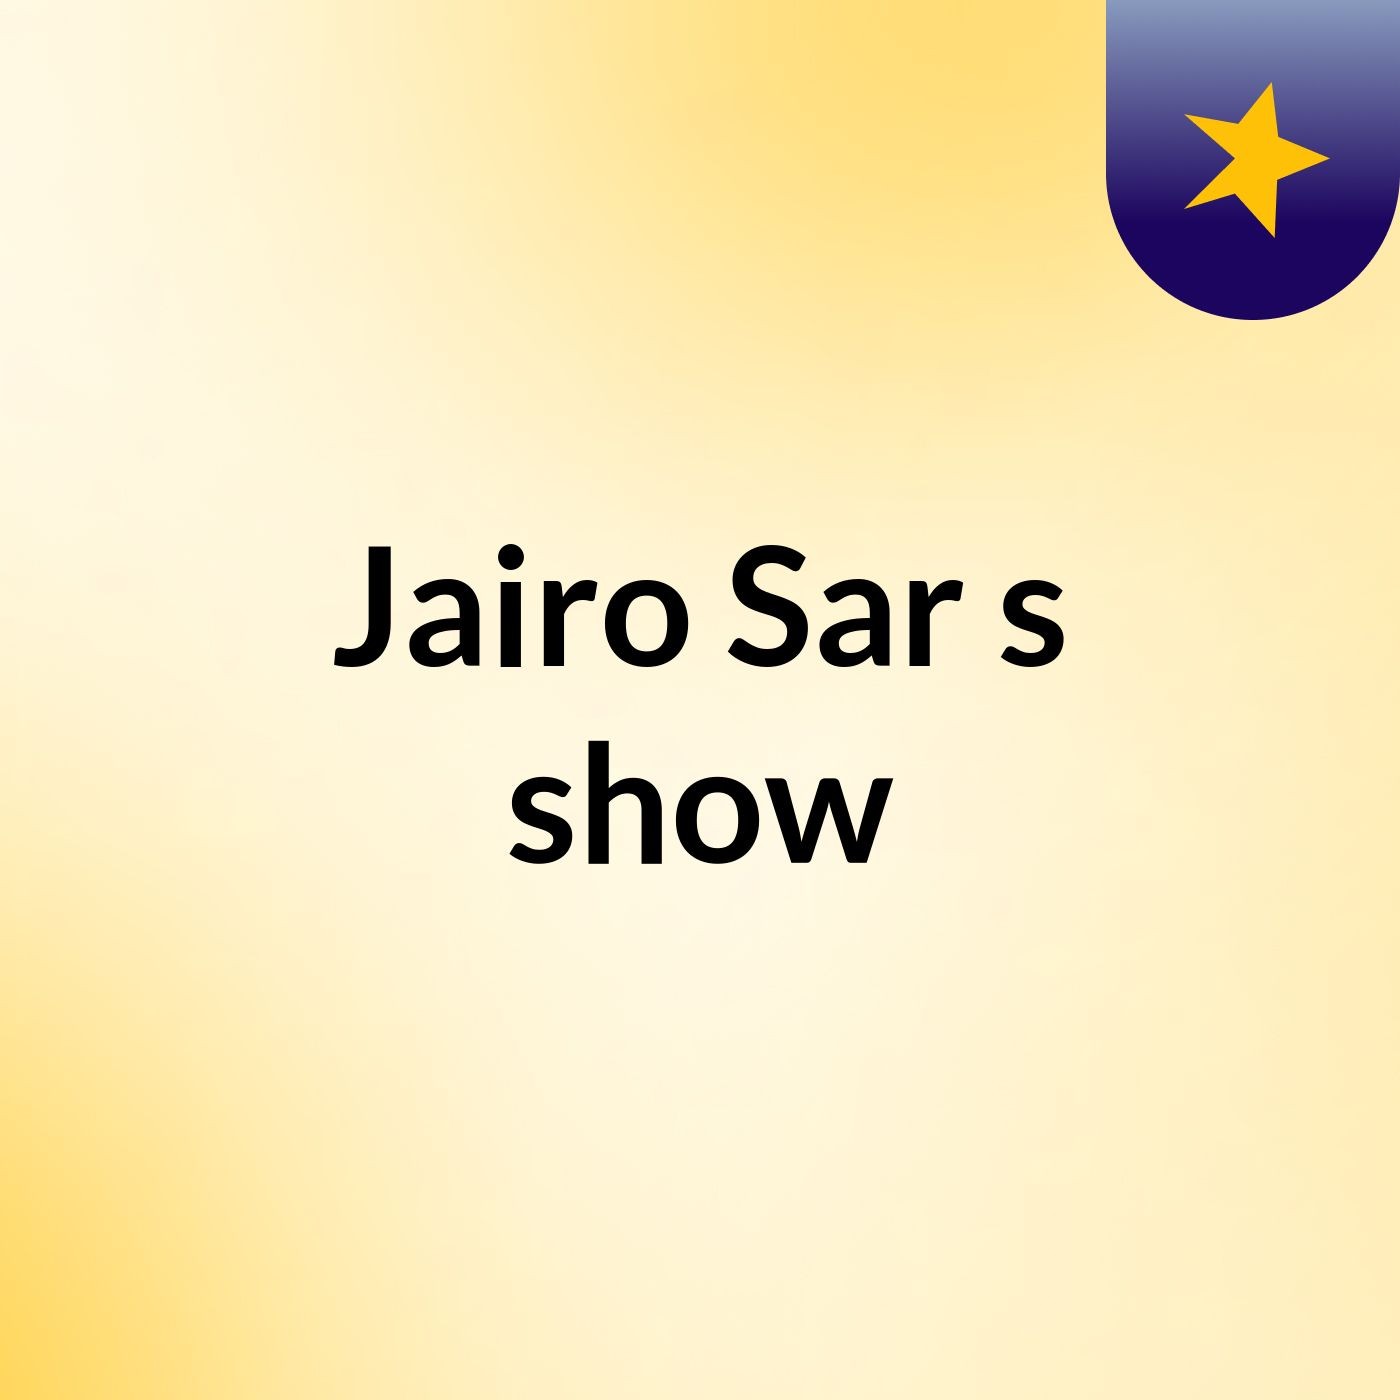 Jairo Sar's show